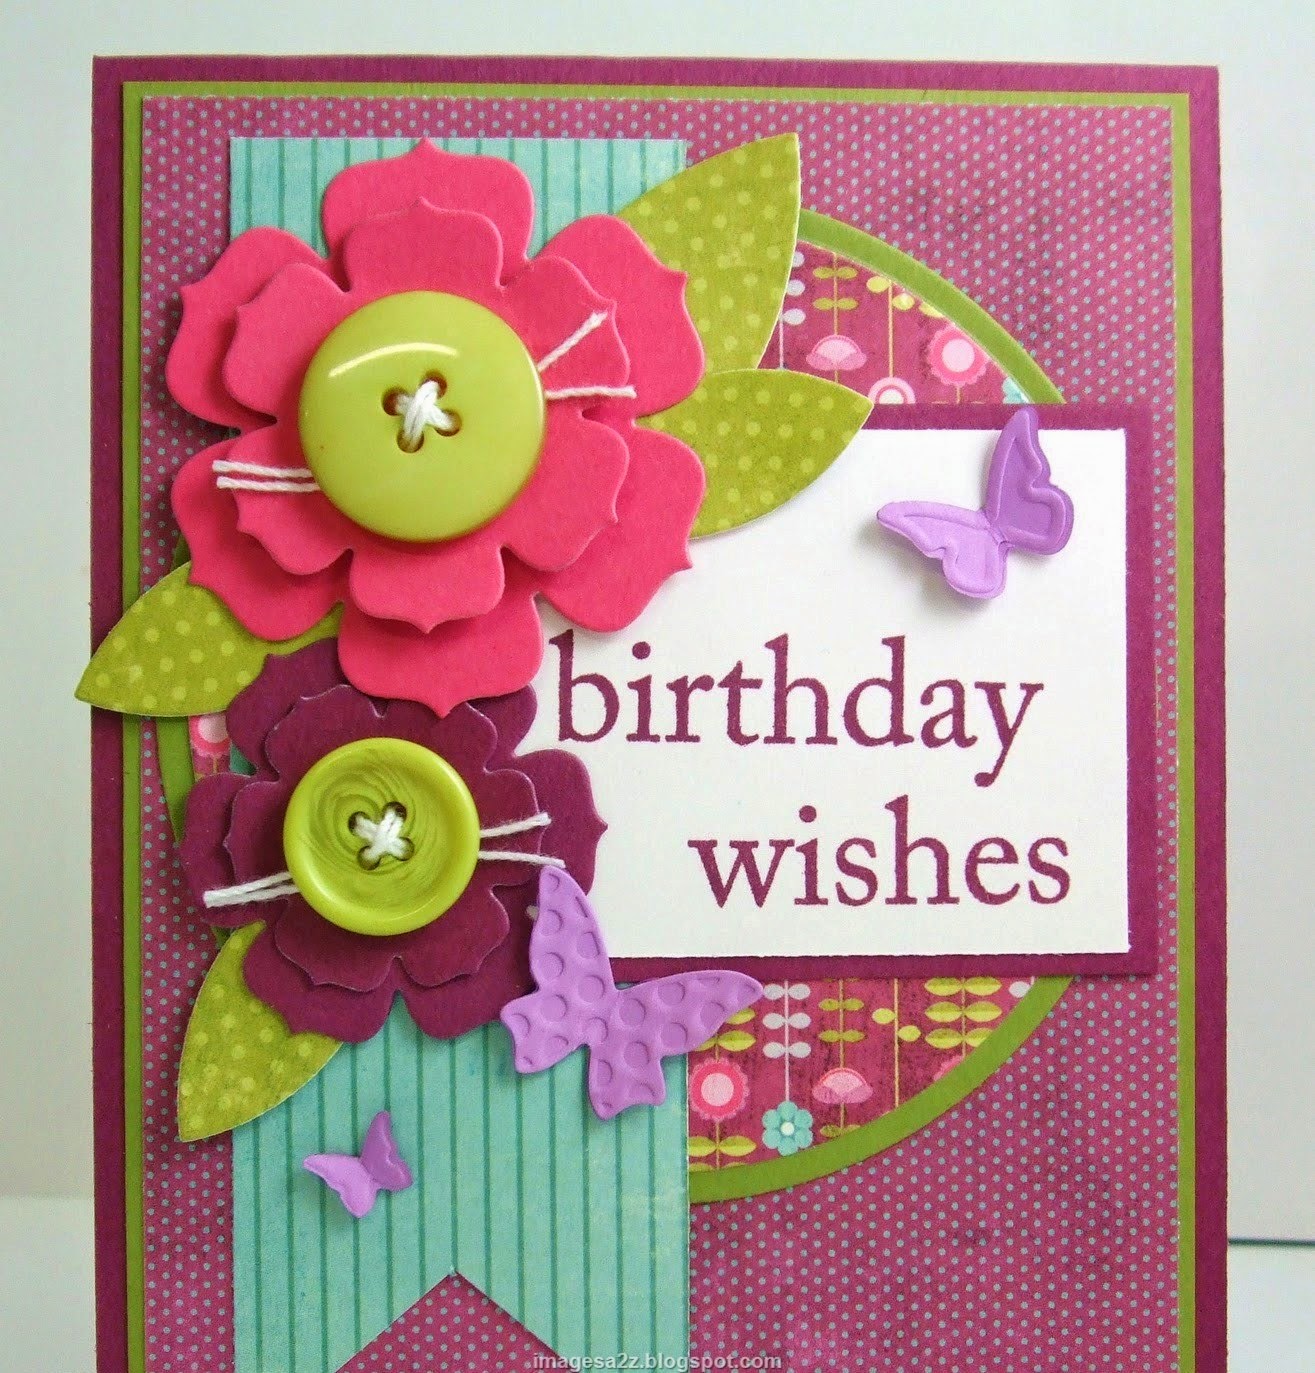 personalized-birthday-invitations-birthday-postcards-happy-birthday-wishes-quotes-cakes